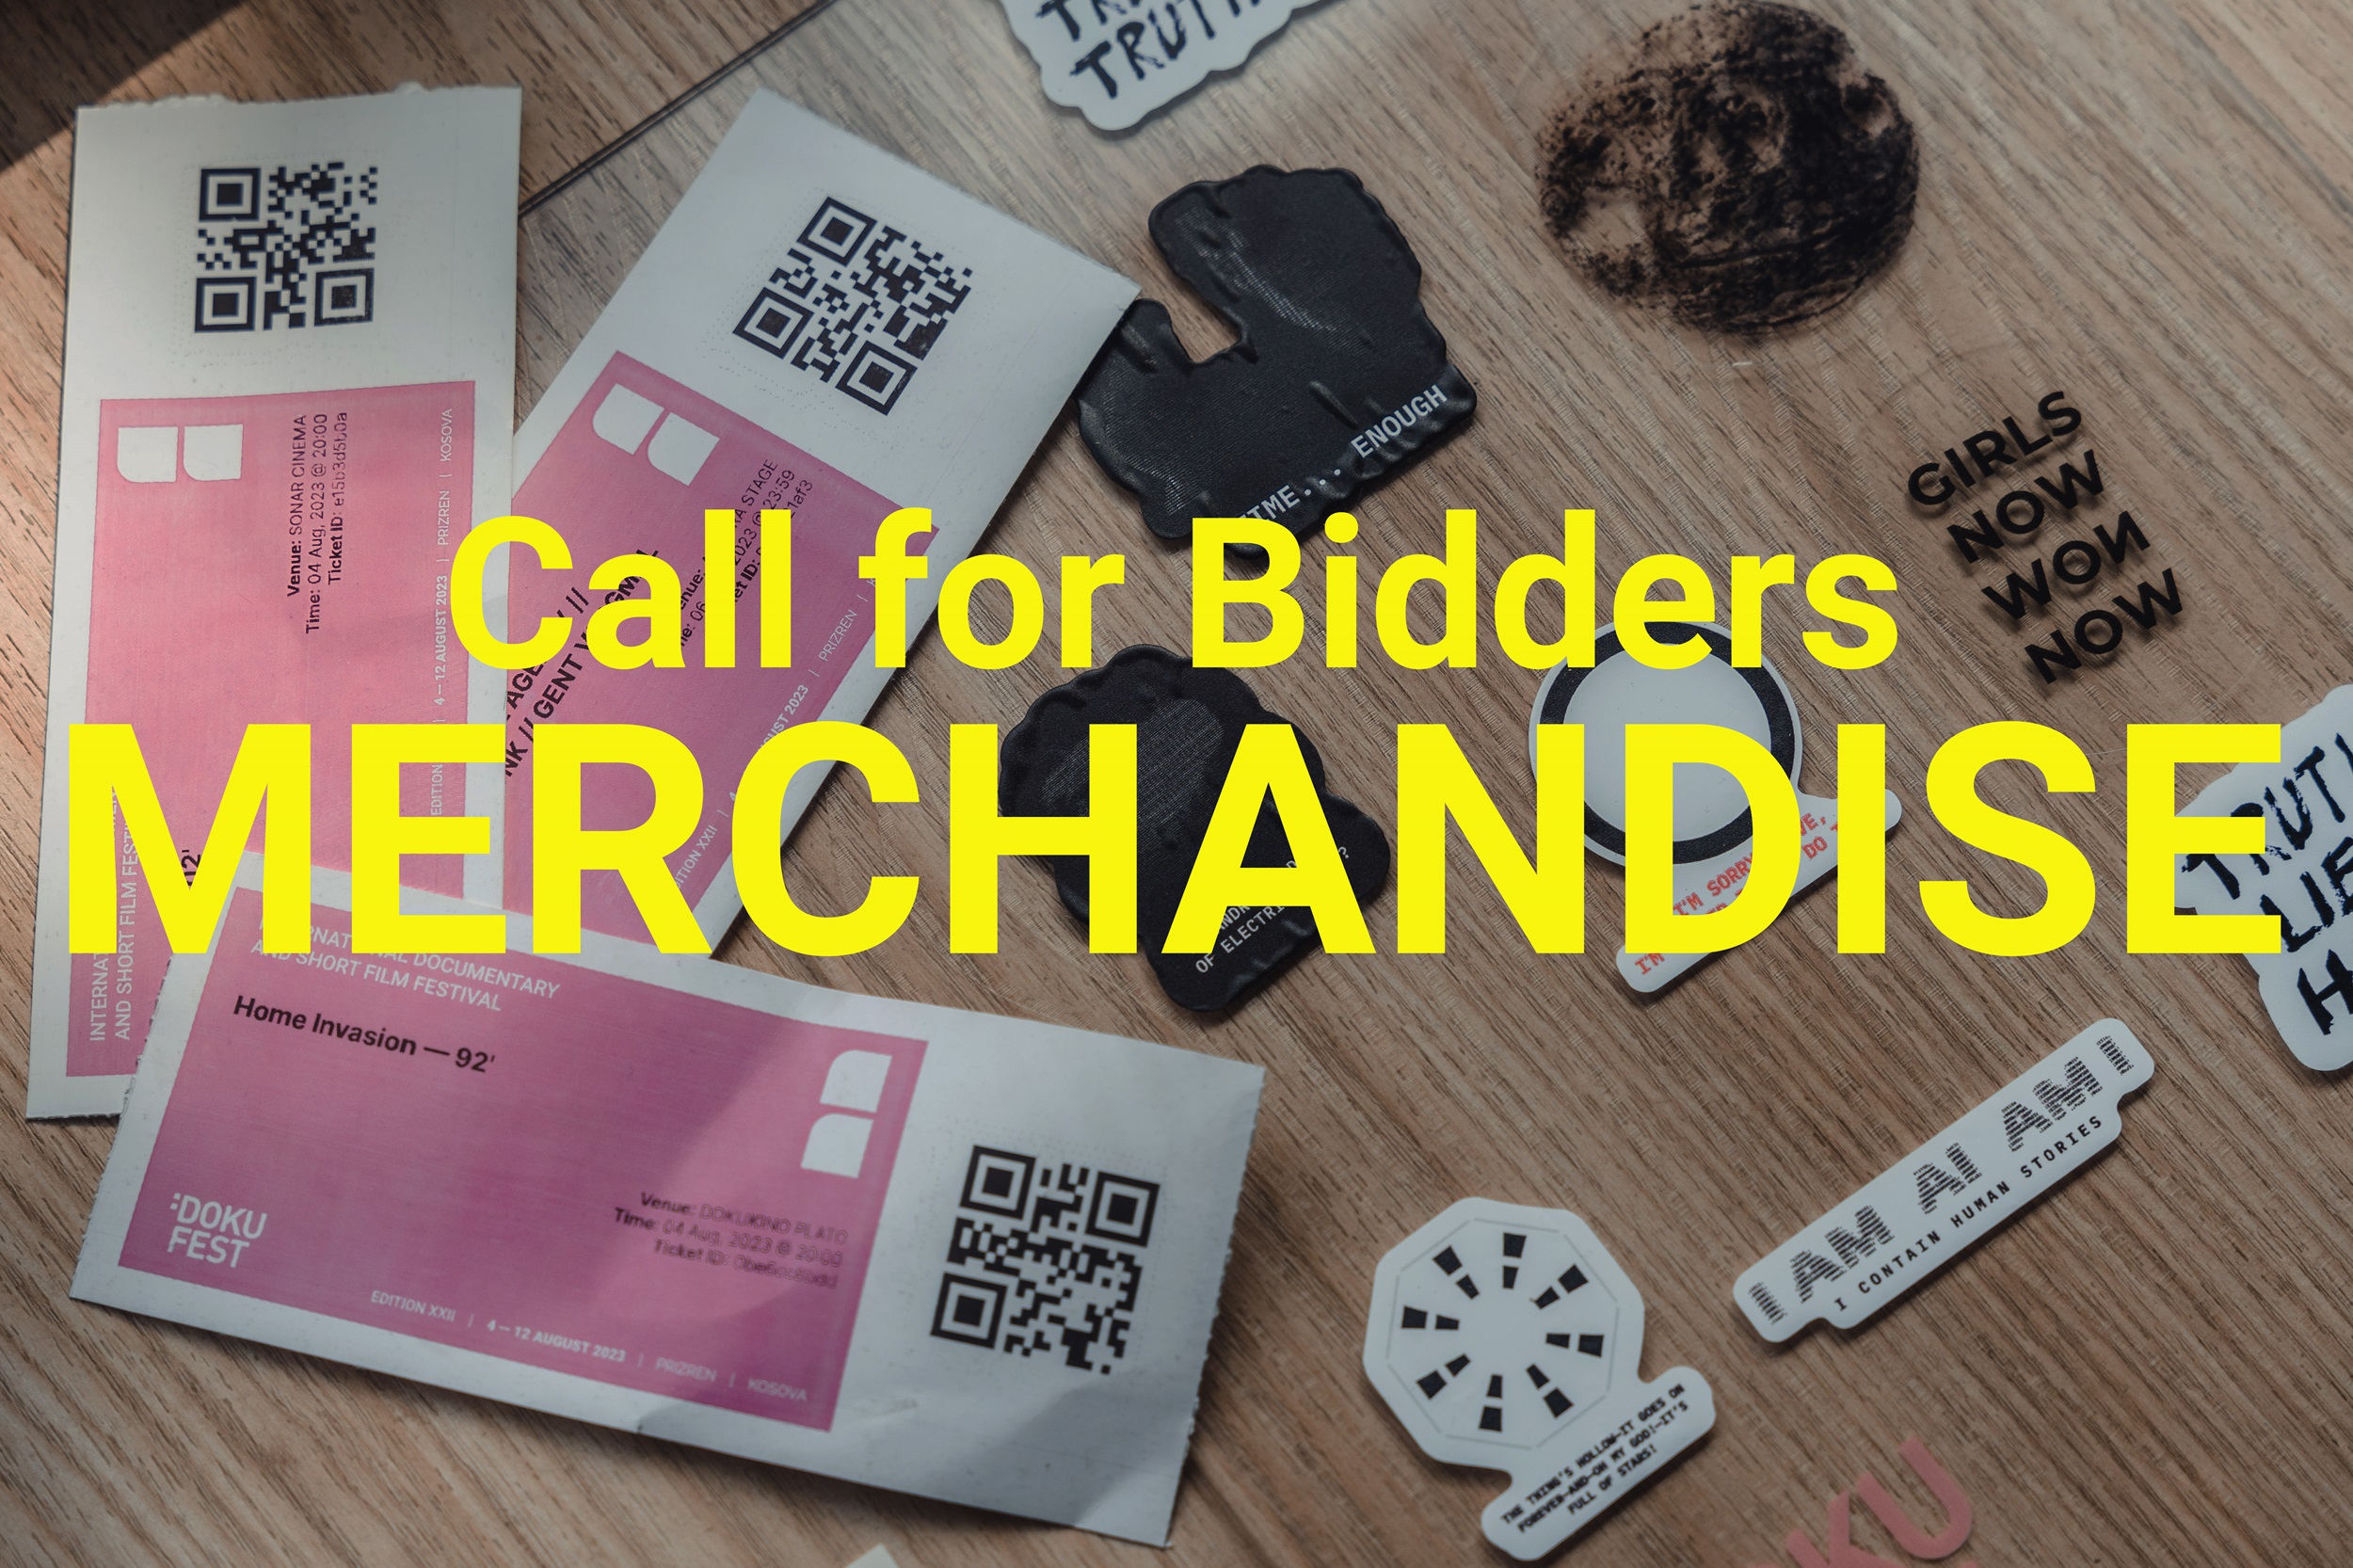 CALL FOR BIDDERS: Merchandise